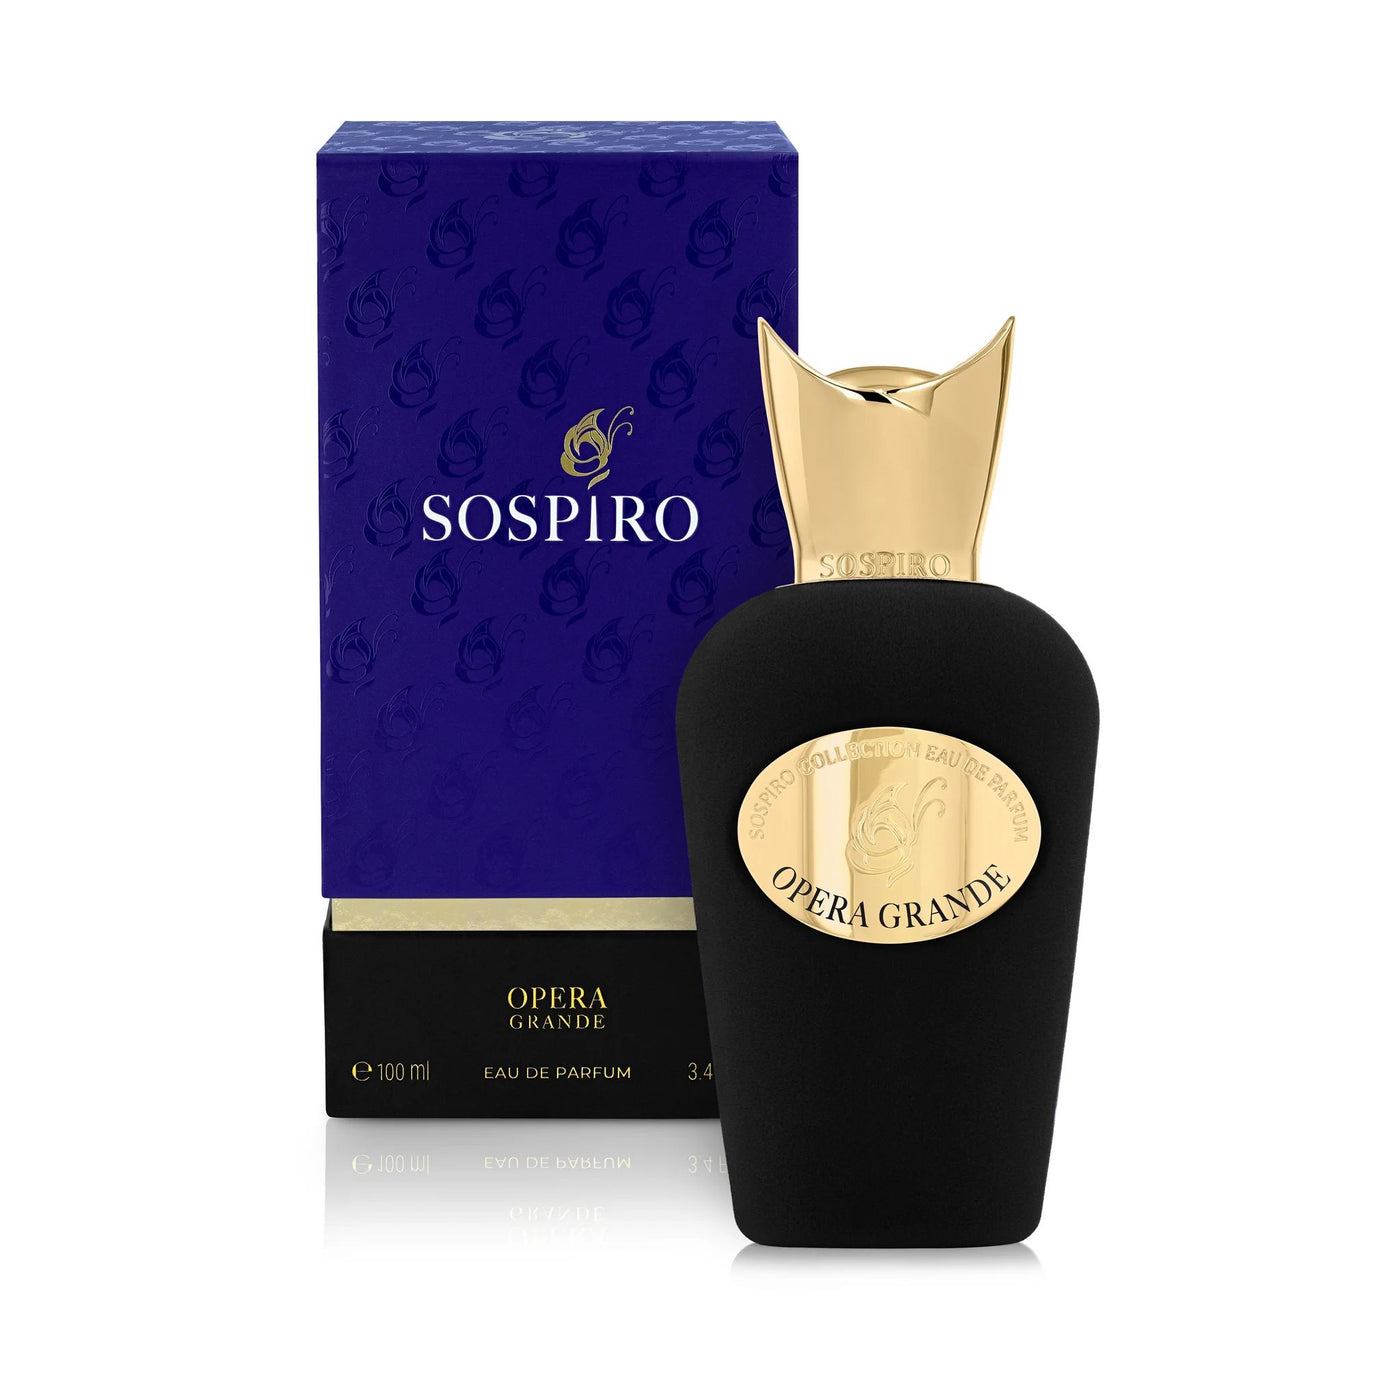 Opera Grande Sospiro Perfume